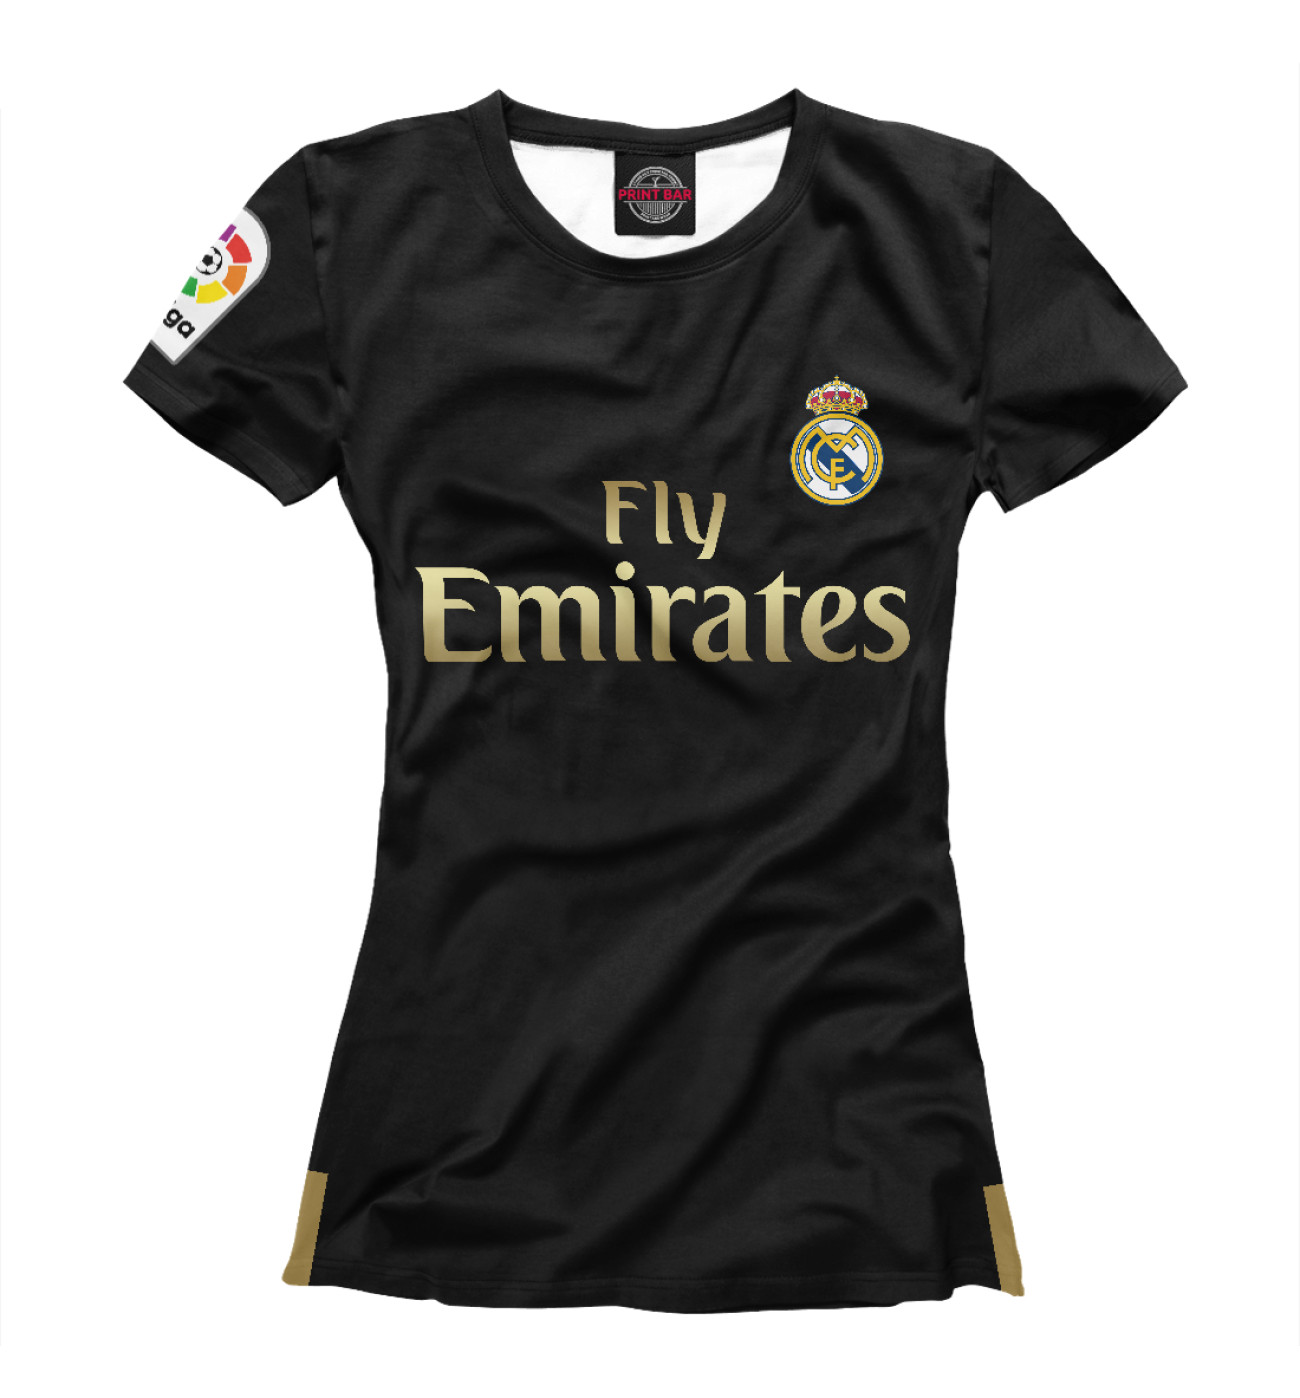 Женская Футболка Real Madrid Exclusive 2020, артикул: REA-350079-fut-1